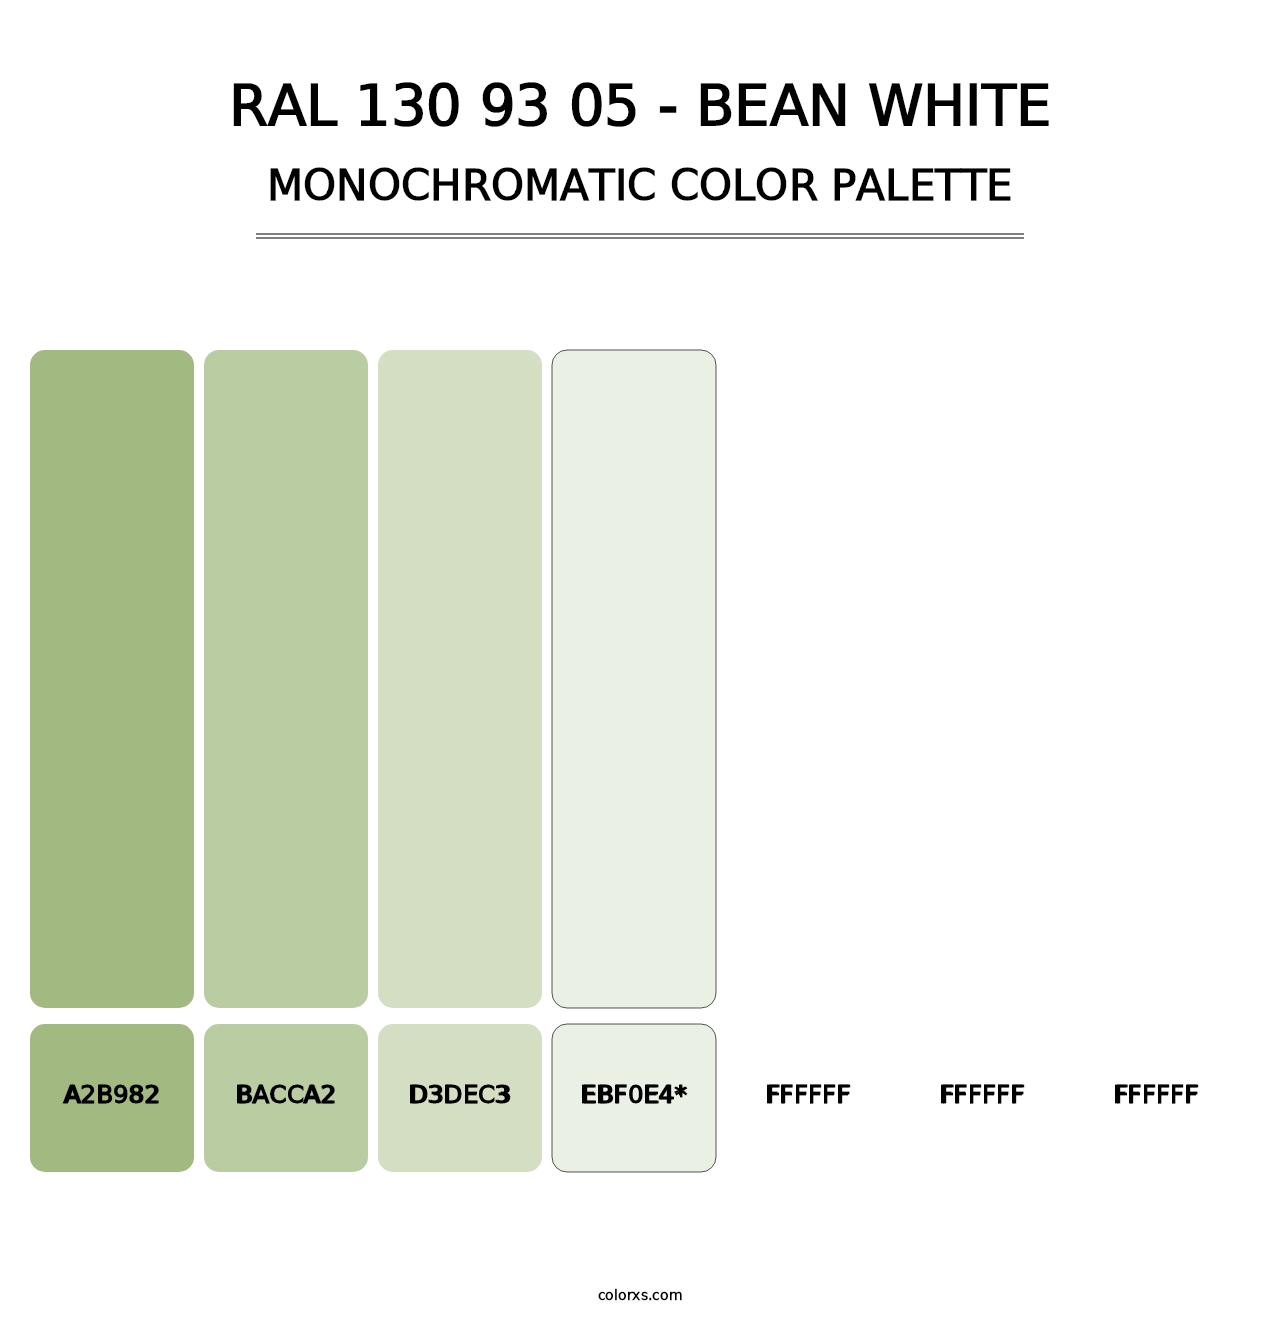 RAL 130 93 05 - Bean White - Monochromatic Color Palette